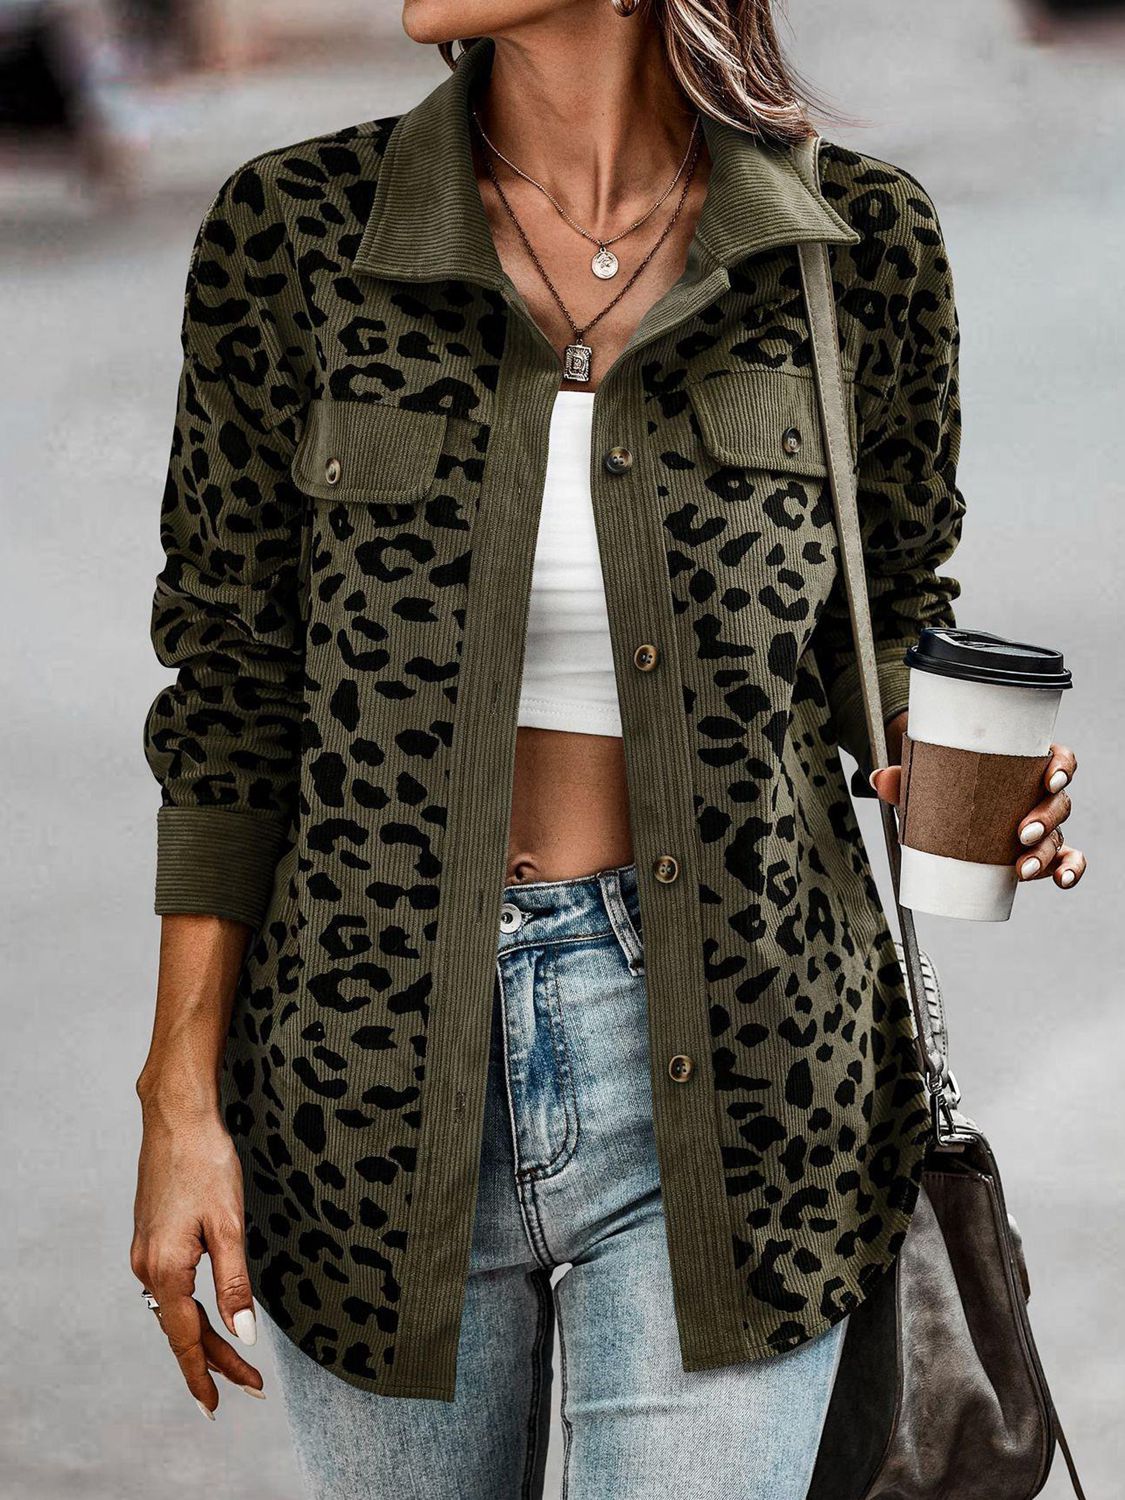 Damaris Leopard Buttoned Jacket